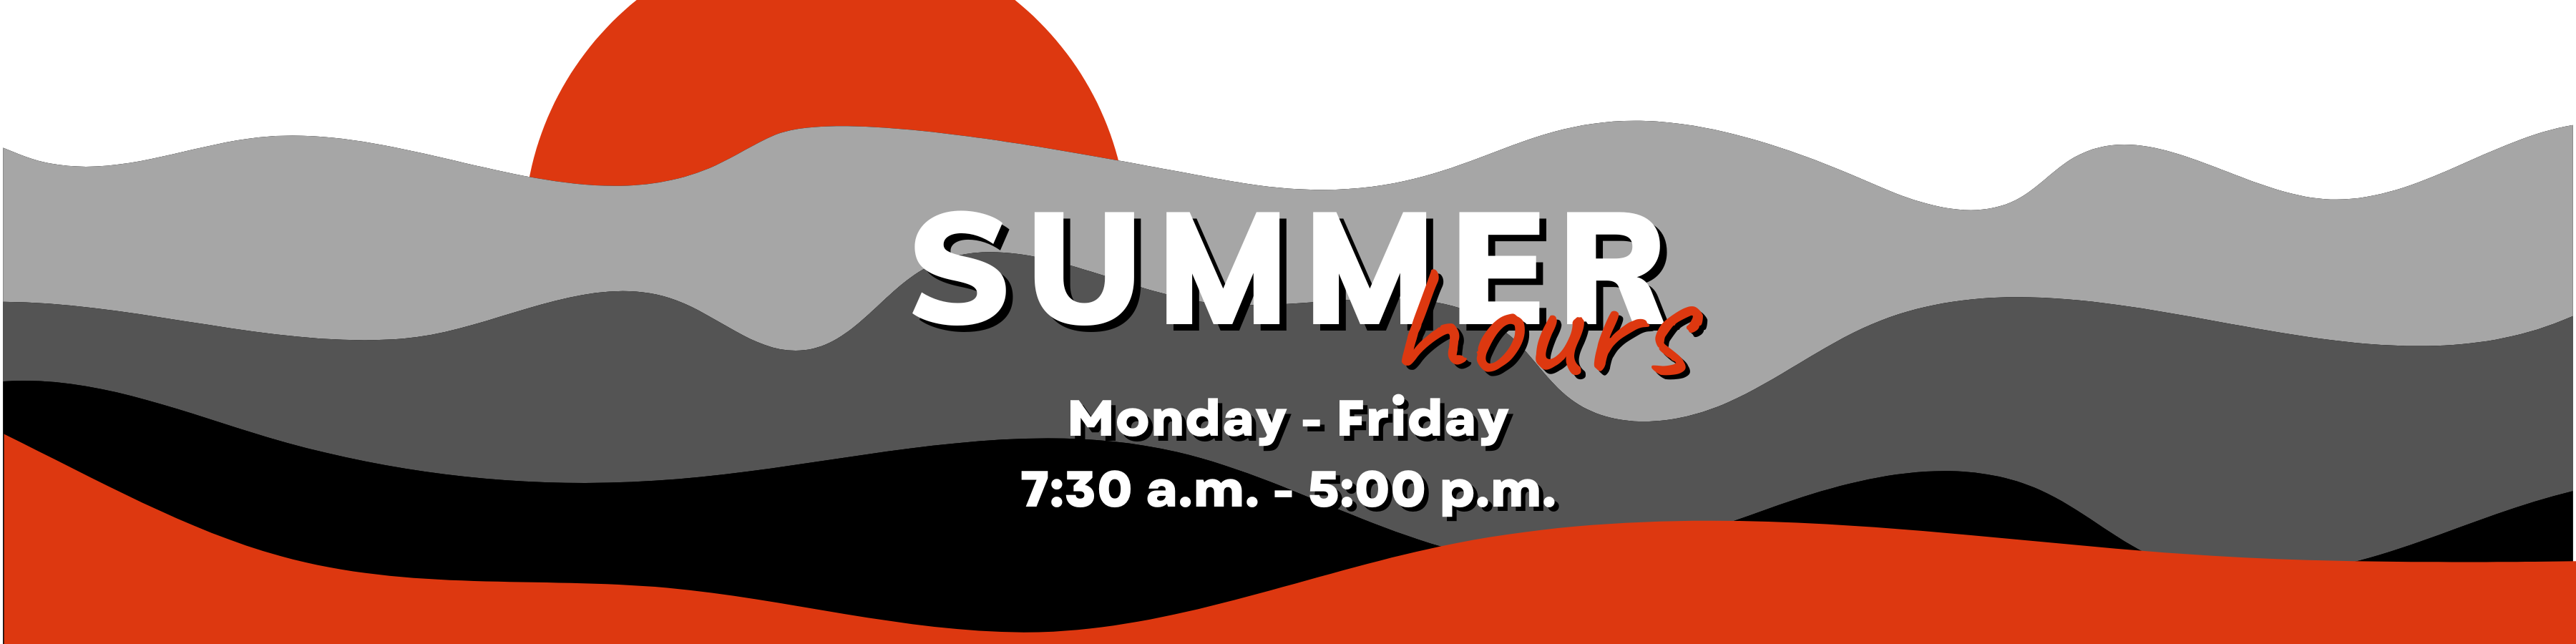 Summer Hours Slider - Monday through Friday 7:30 a.m. until 5:00 p.m. 